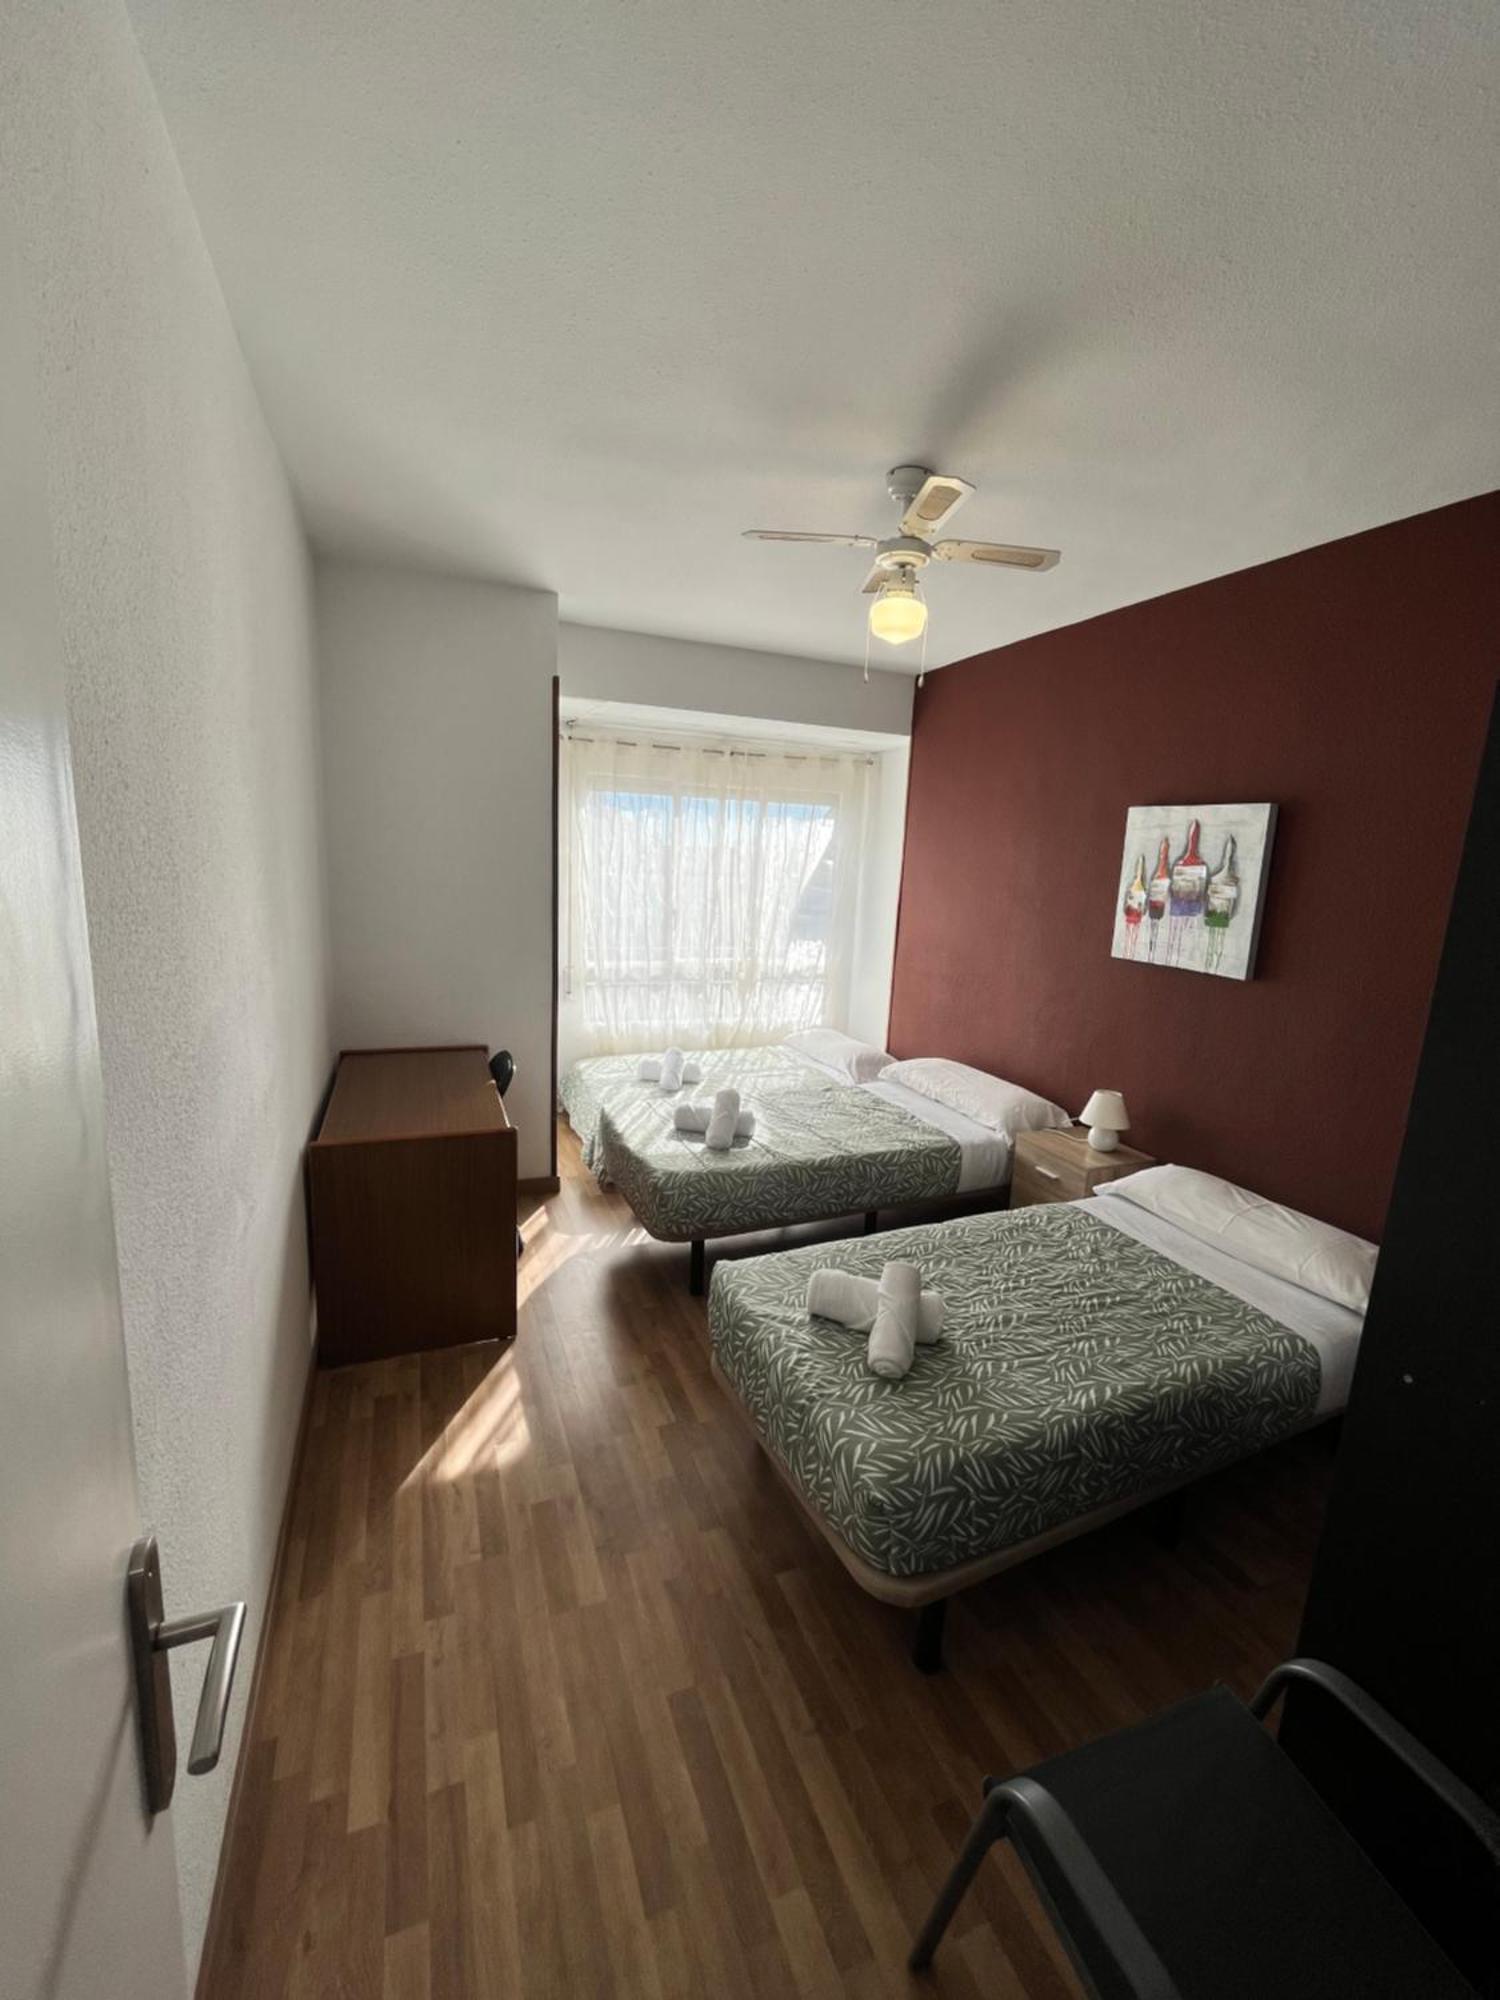 4 Bedrooms -Seneca Center Apartment 阿利坎特 外观 照片